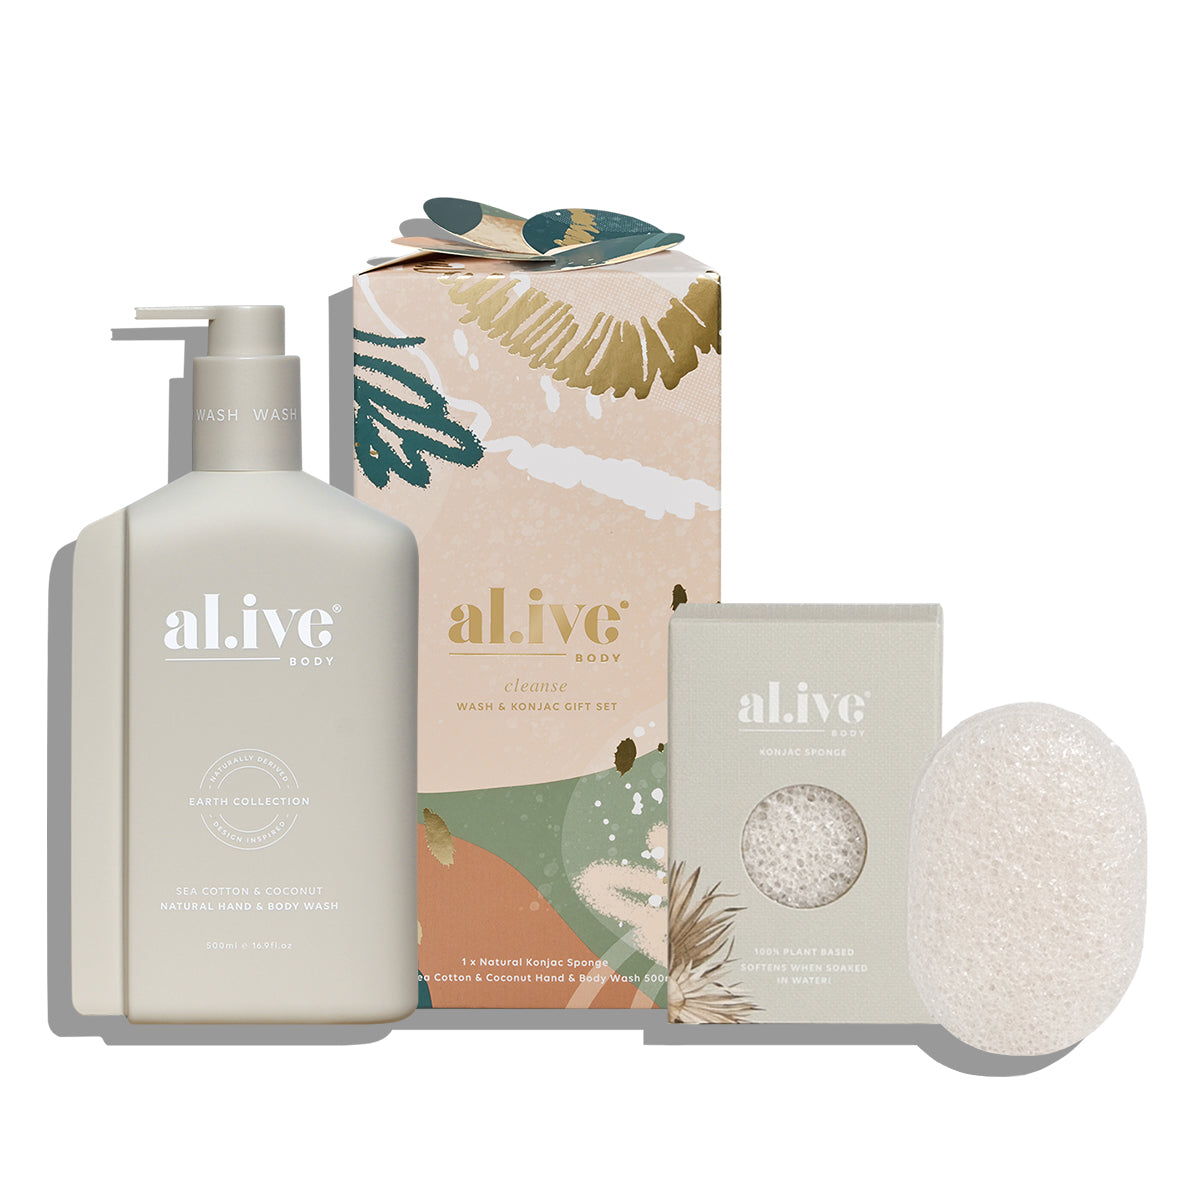 AL.IVE BODY | Cleanse Gift Set - Hand & Body Wash + Kognac Sponge